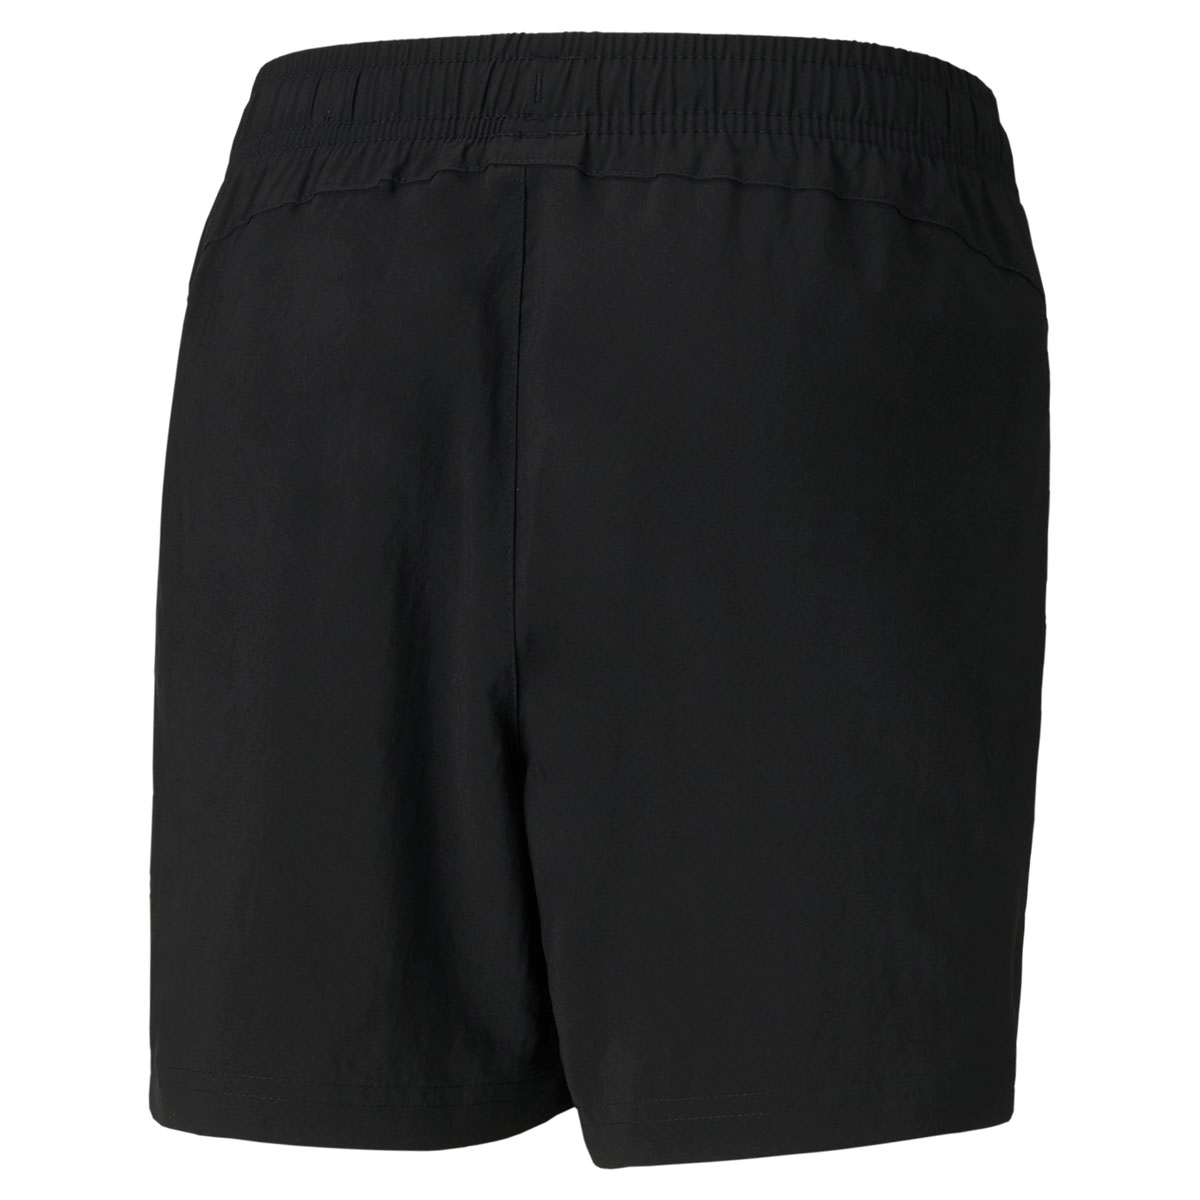 Sports Shorts - Black - Men